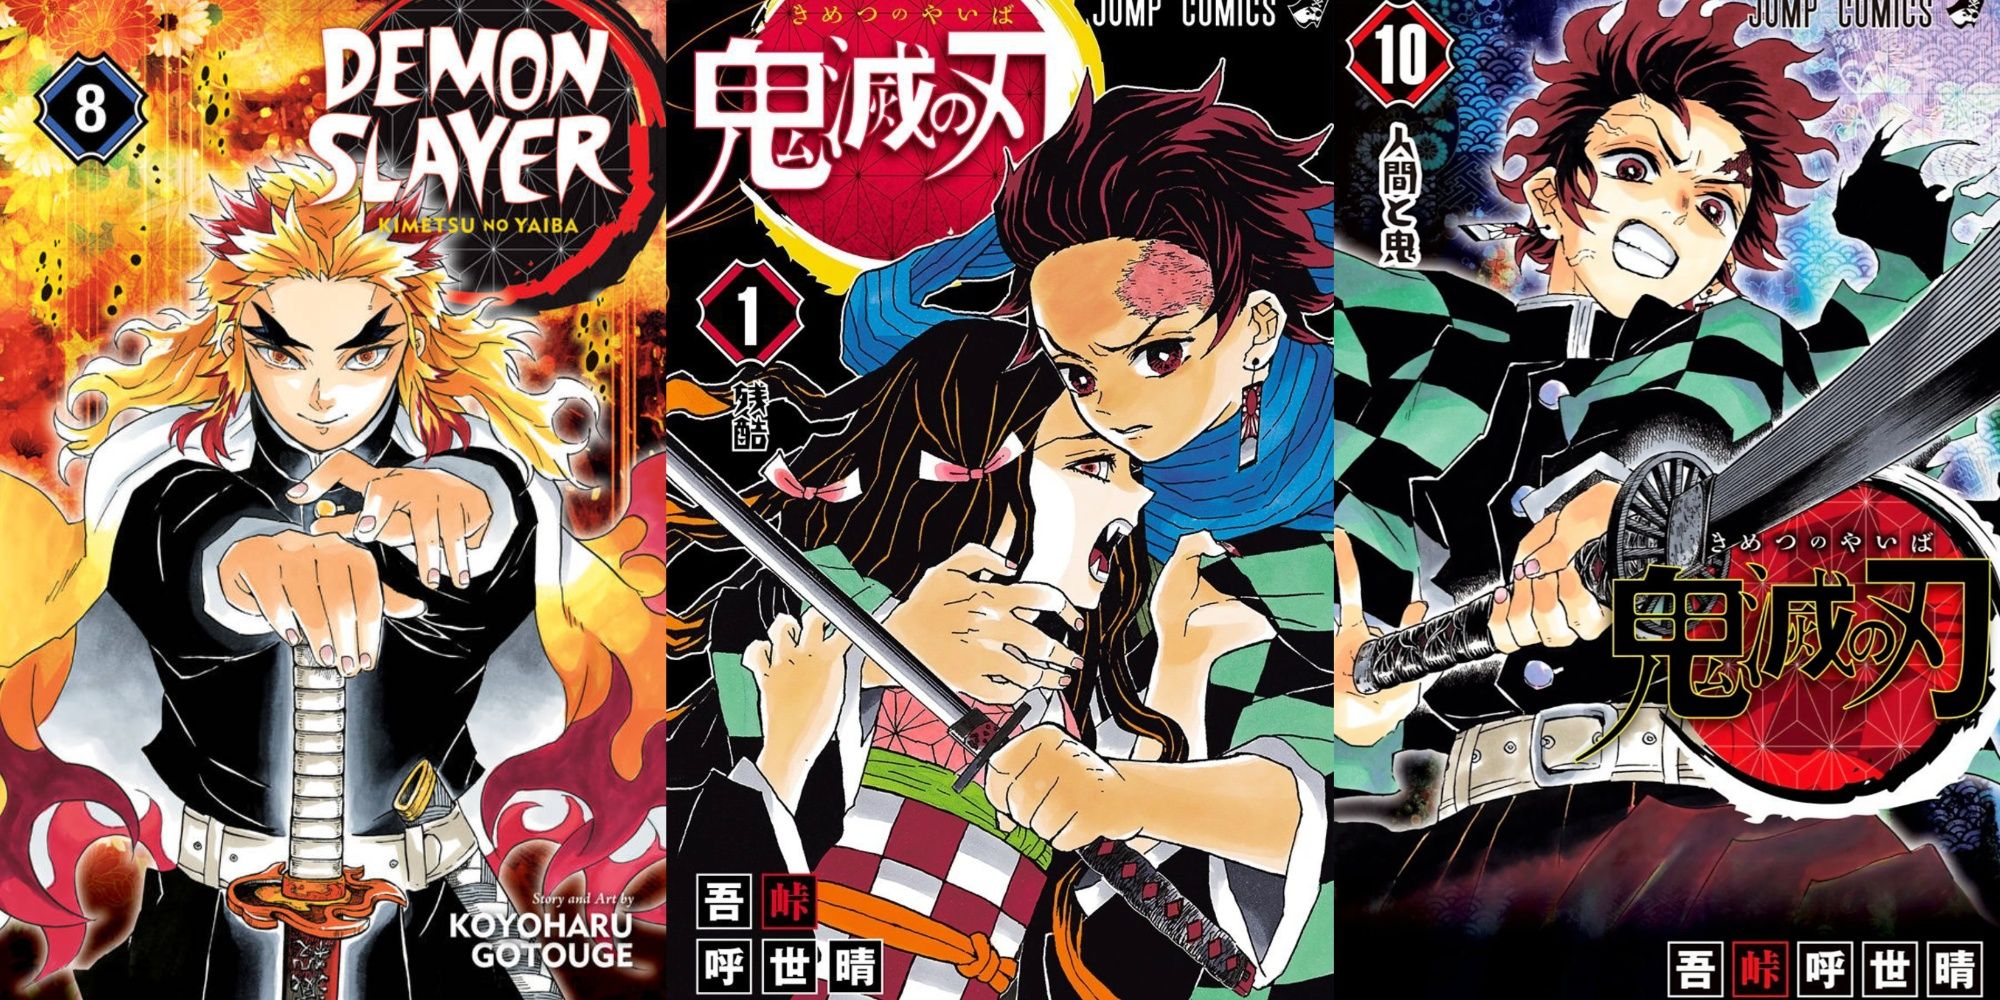 Kimetsu No Yaiba Manga  Slayer anime, Anime demon, Manga